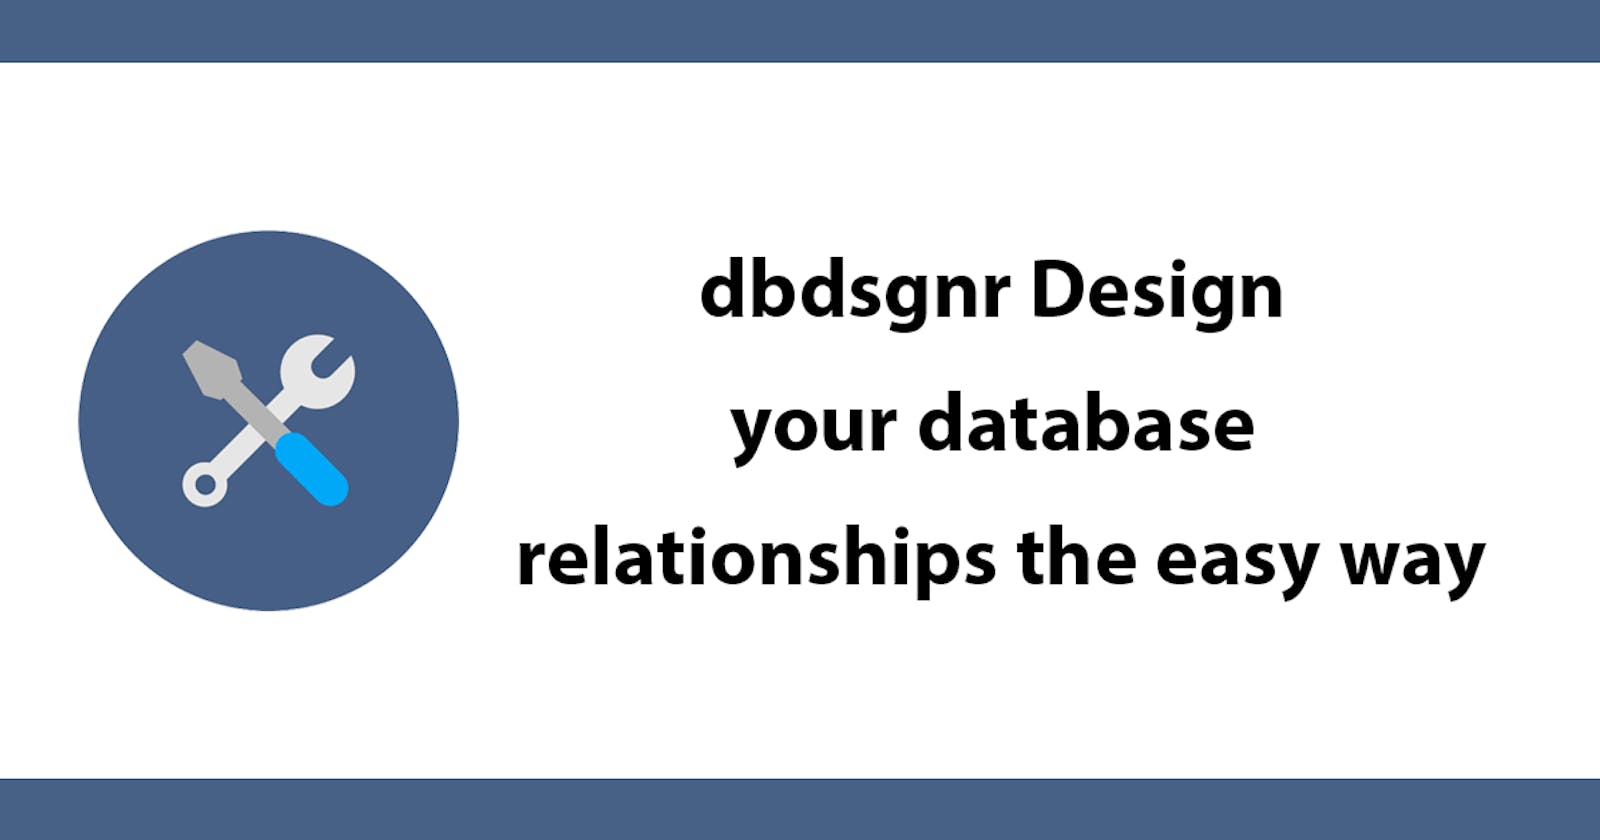 dbdsgnr Design your database relationships the easy way